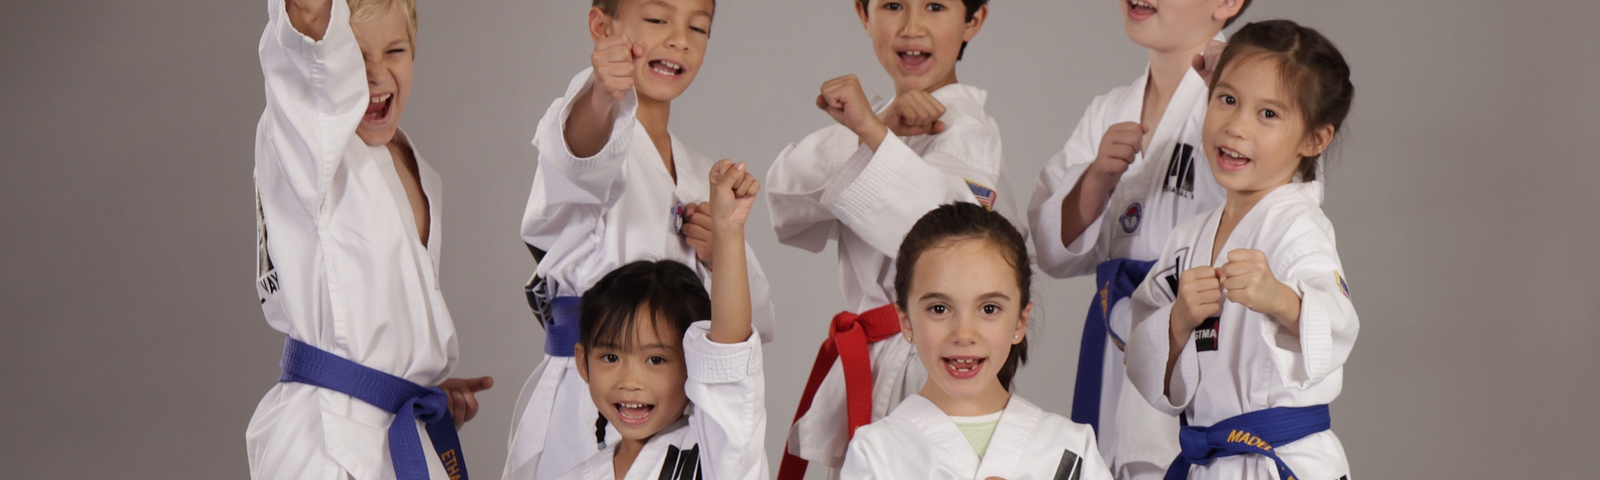 kids in martial arts uniform